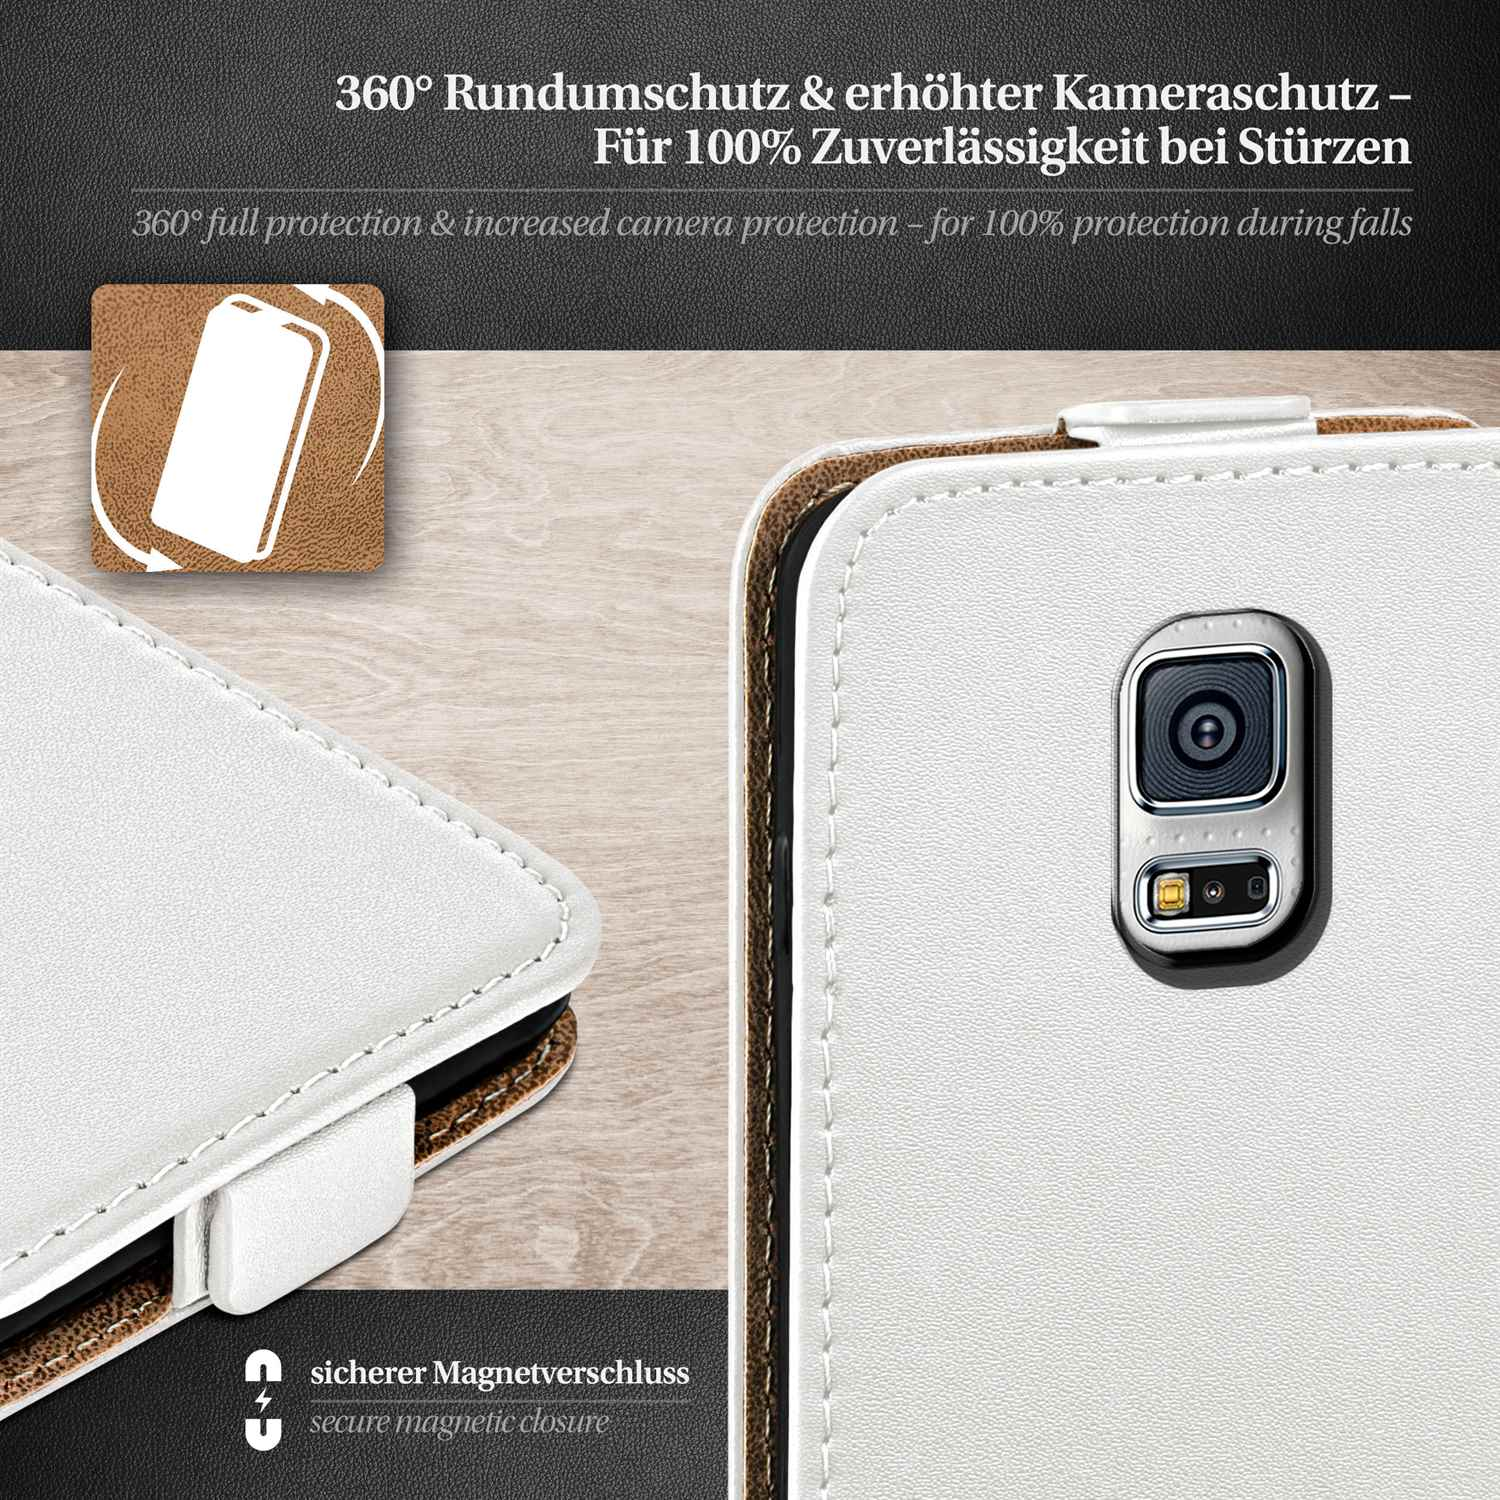 MOEX Flip Mini, S5 Pearl-White Cover, Flip Case, Galaxy Samsung,